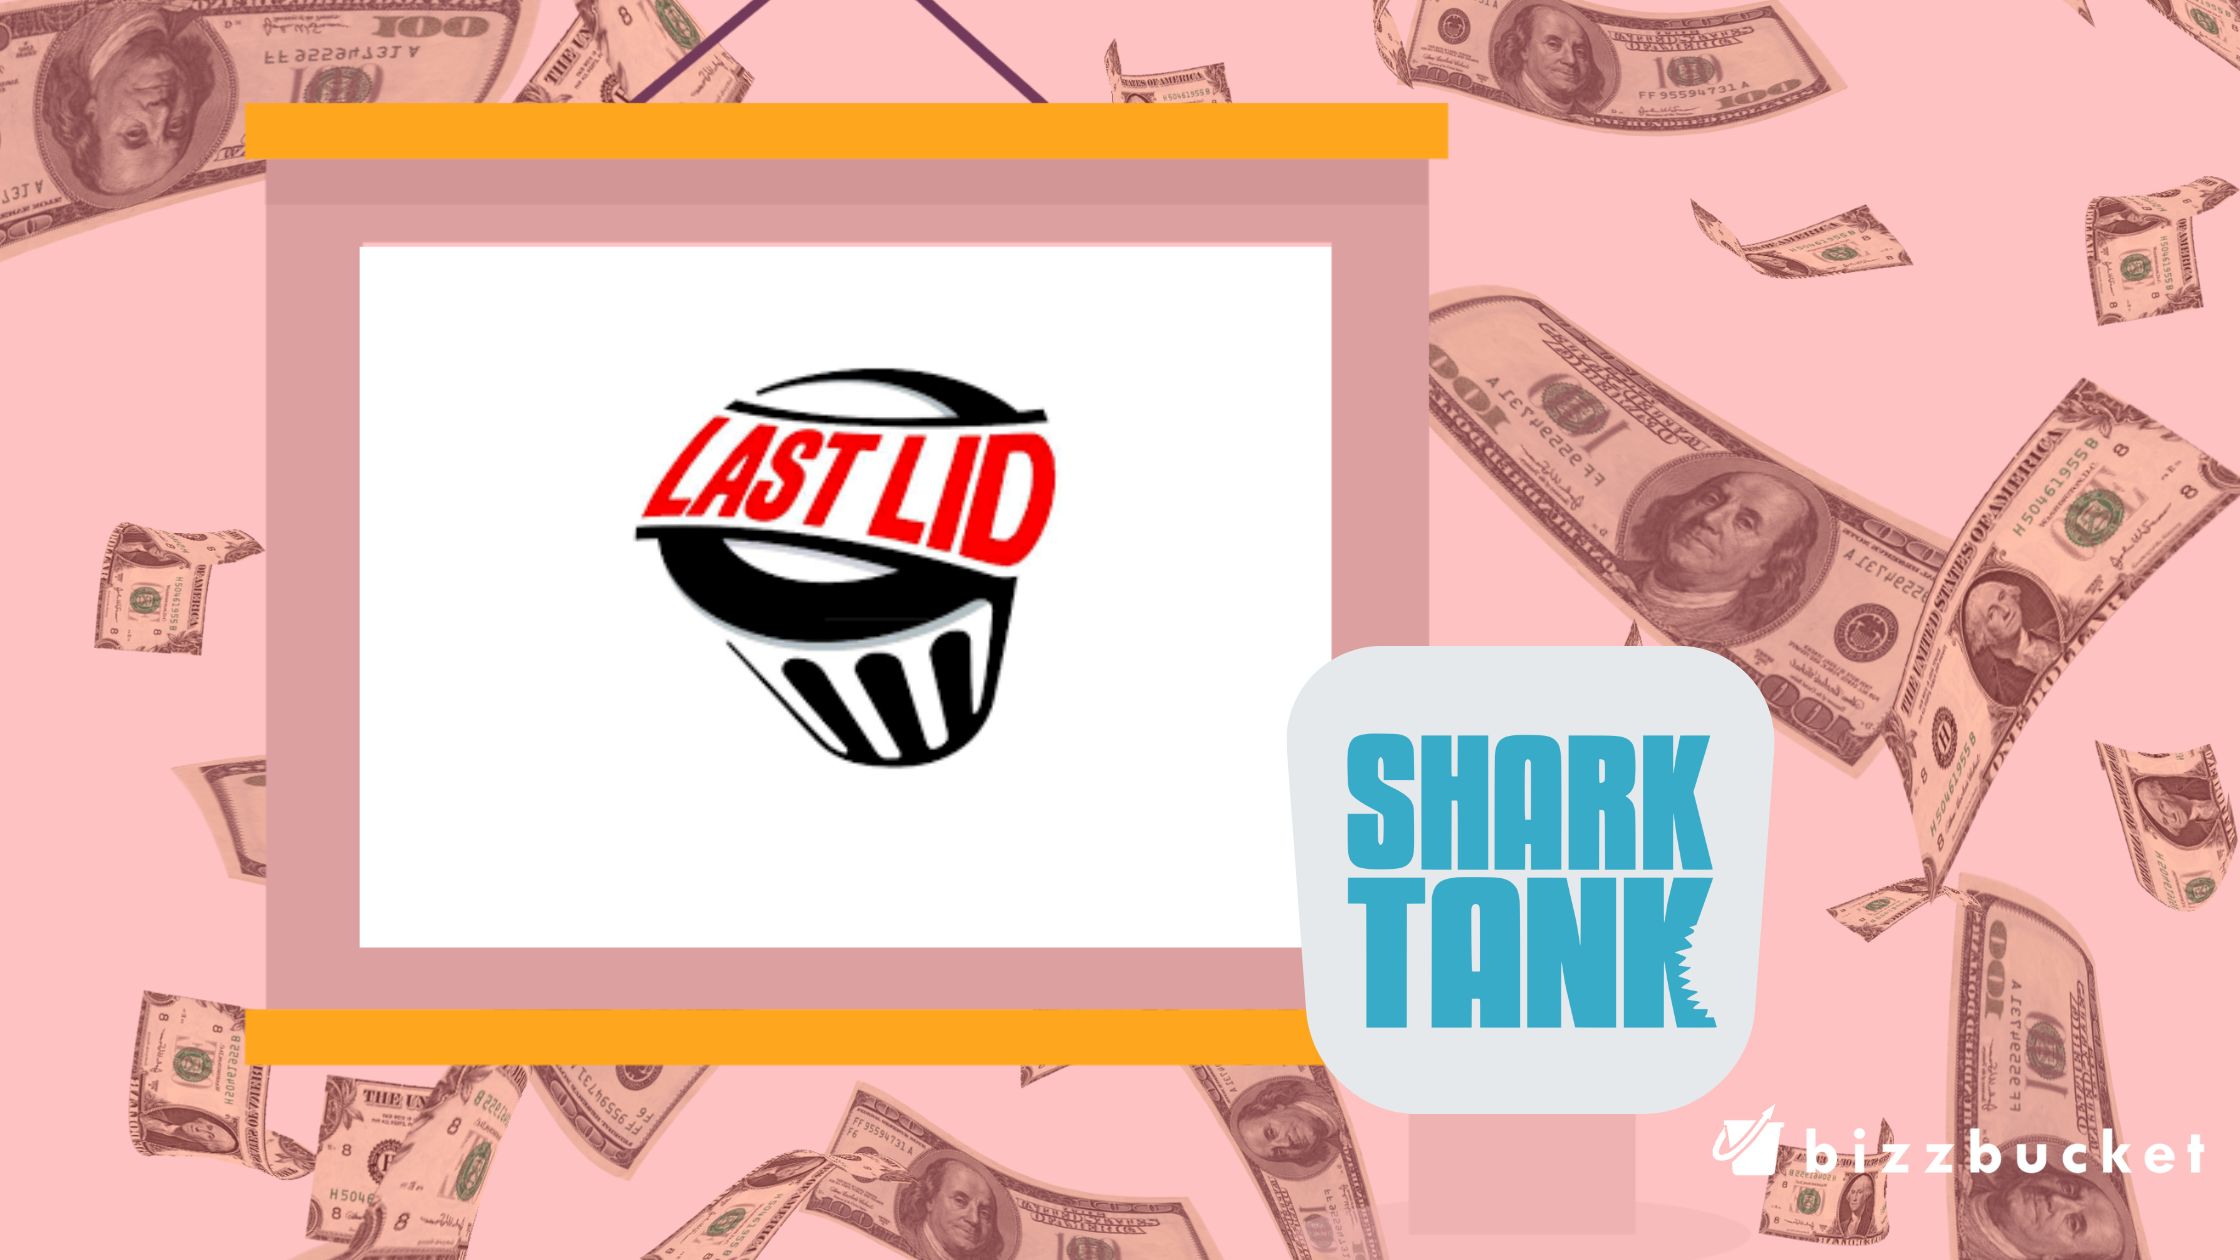 The Last Lid shark tank update